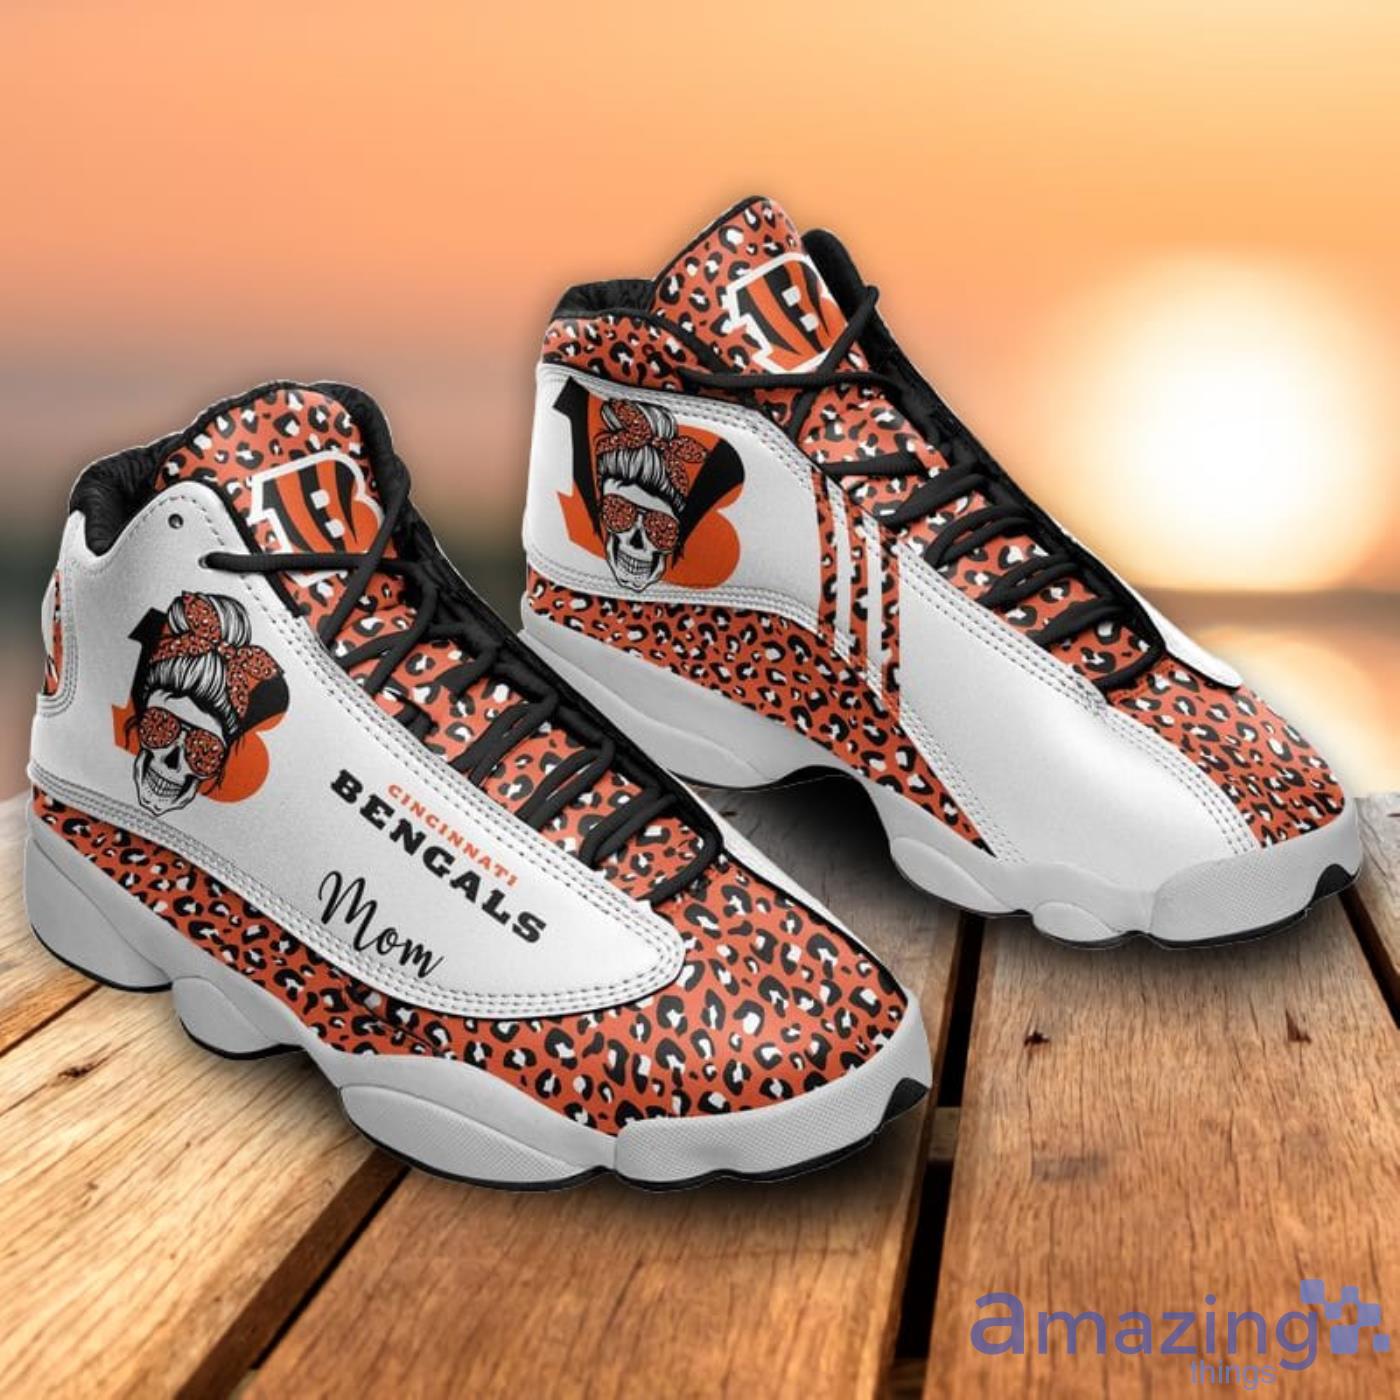 Cincinnati Bengals Mom Leopard Pattern Air Jordan 13 Shoes For Fans